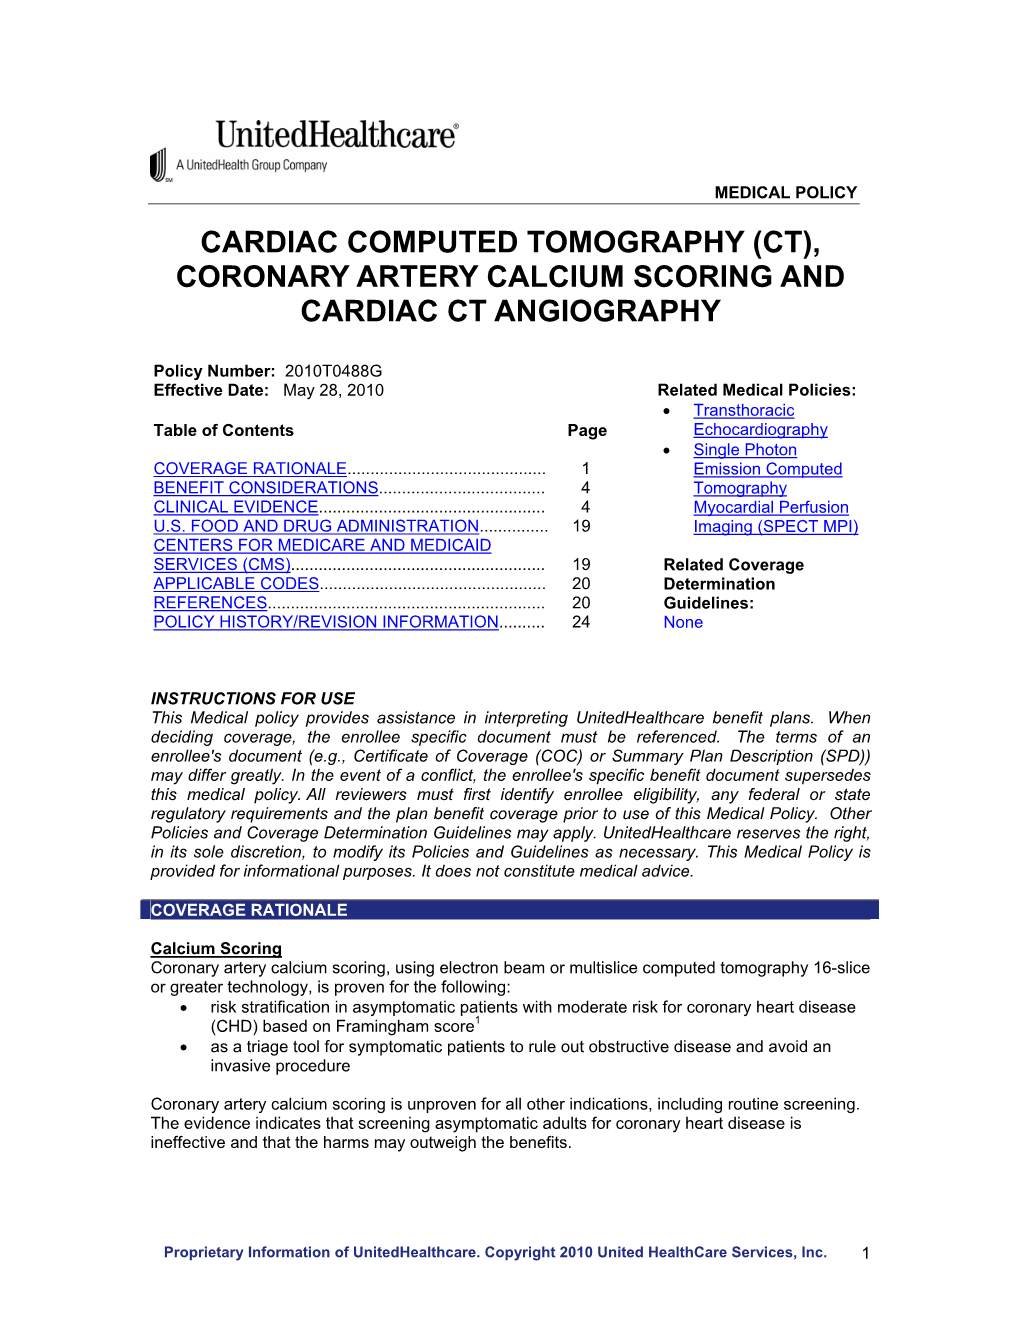 Coronary Artery Calcium Scoring and Cardiac Ct Angiography